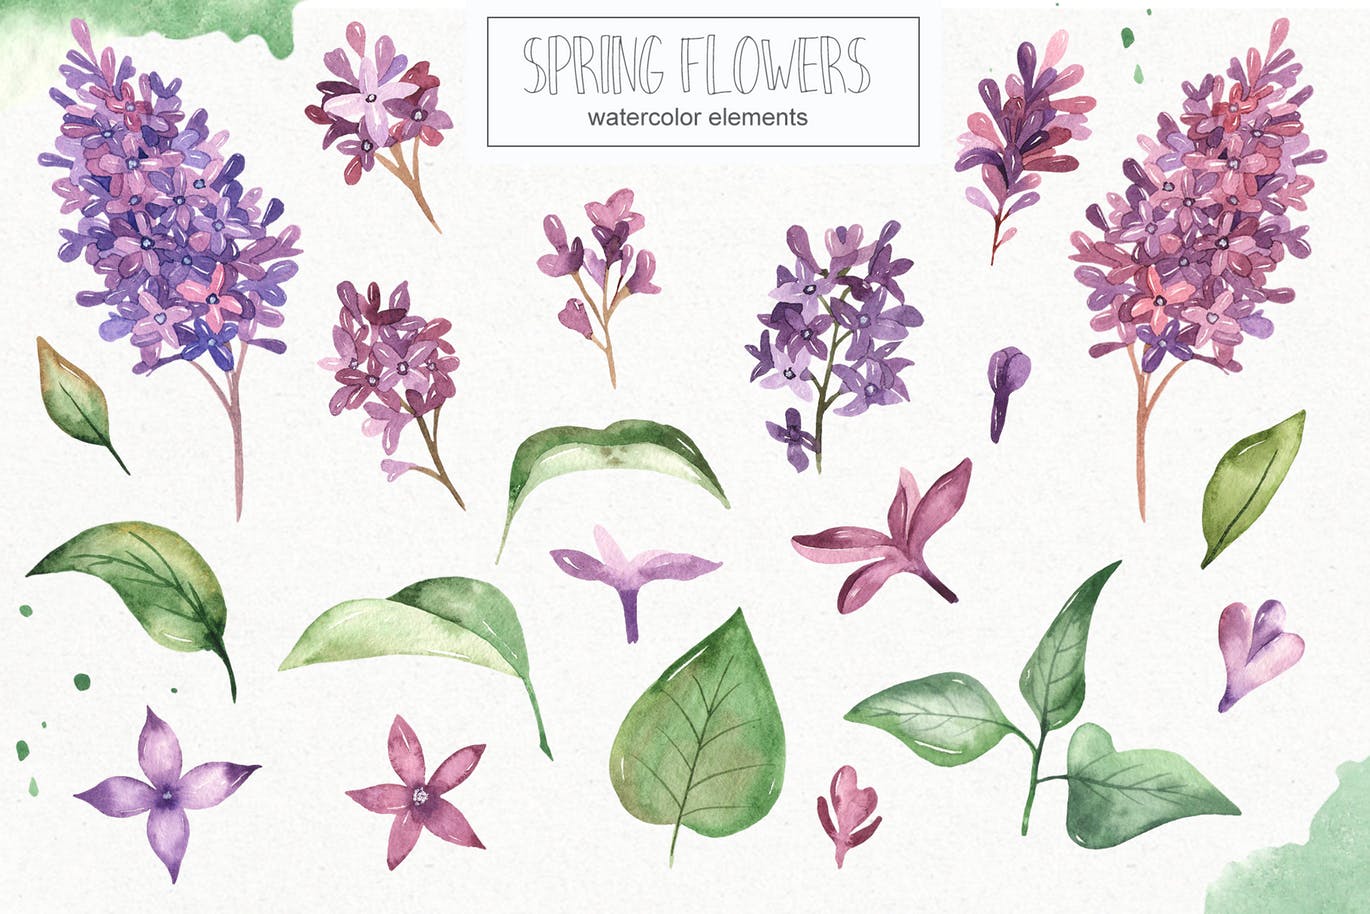 春季花卉水彩素材套装 Watercolor spring flowers collection插图(1)